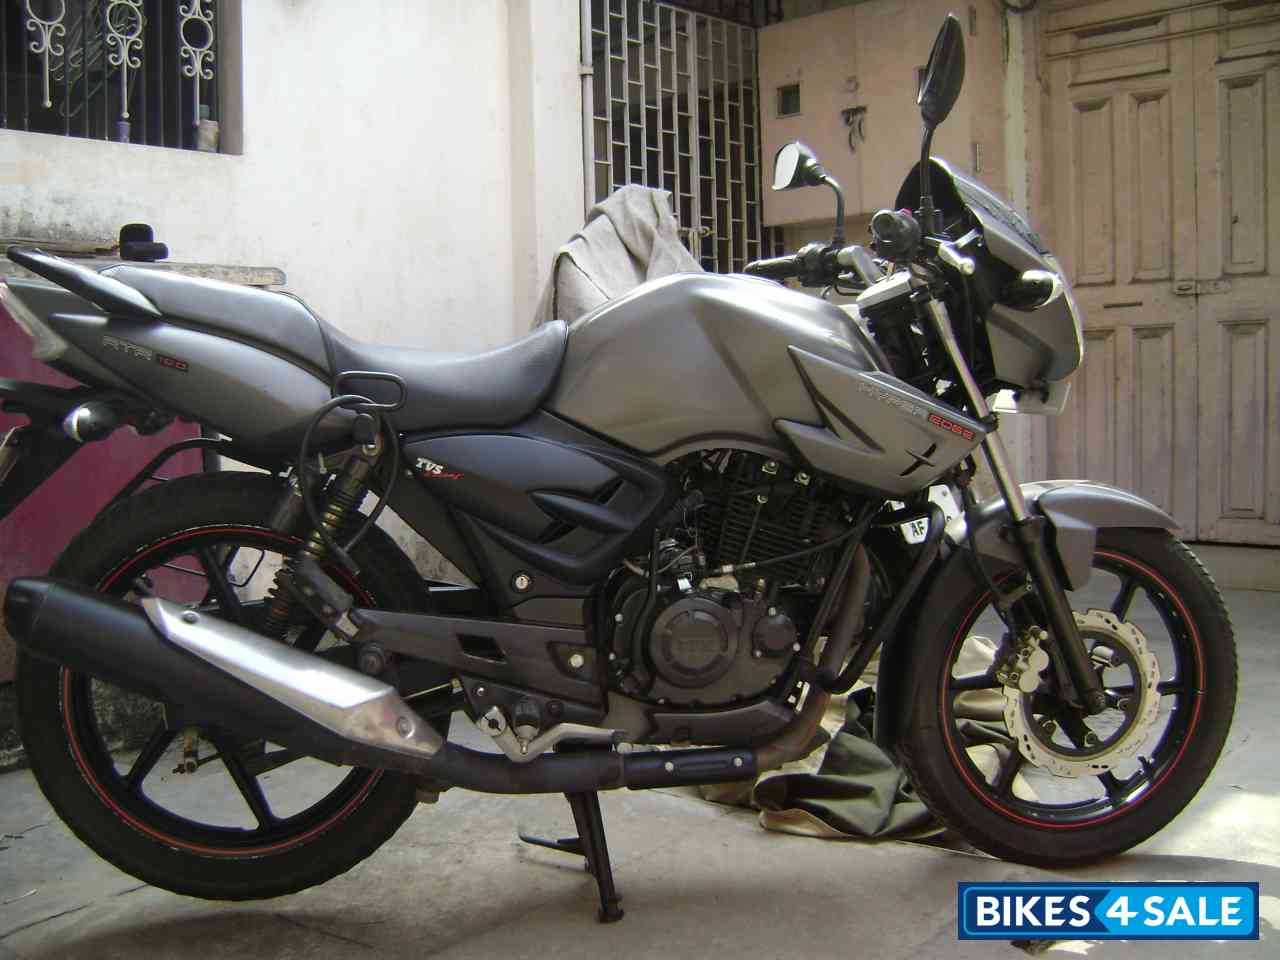 Used 10 Model Tvs Apache Rtr 160 For Sale In Chennai Id Titanium Grey Colour Bikes4sale